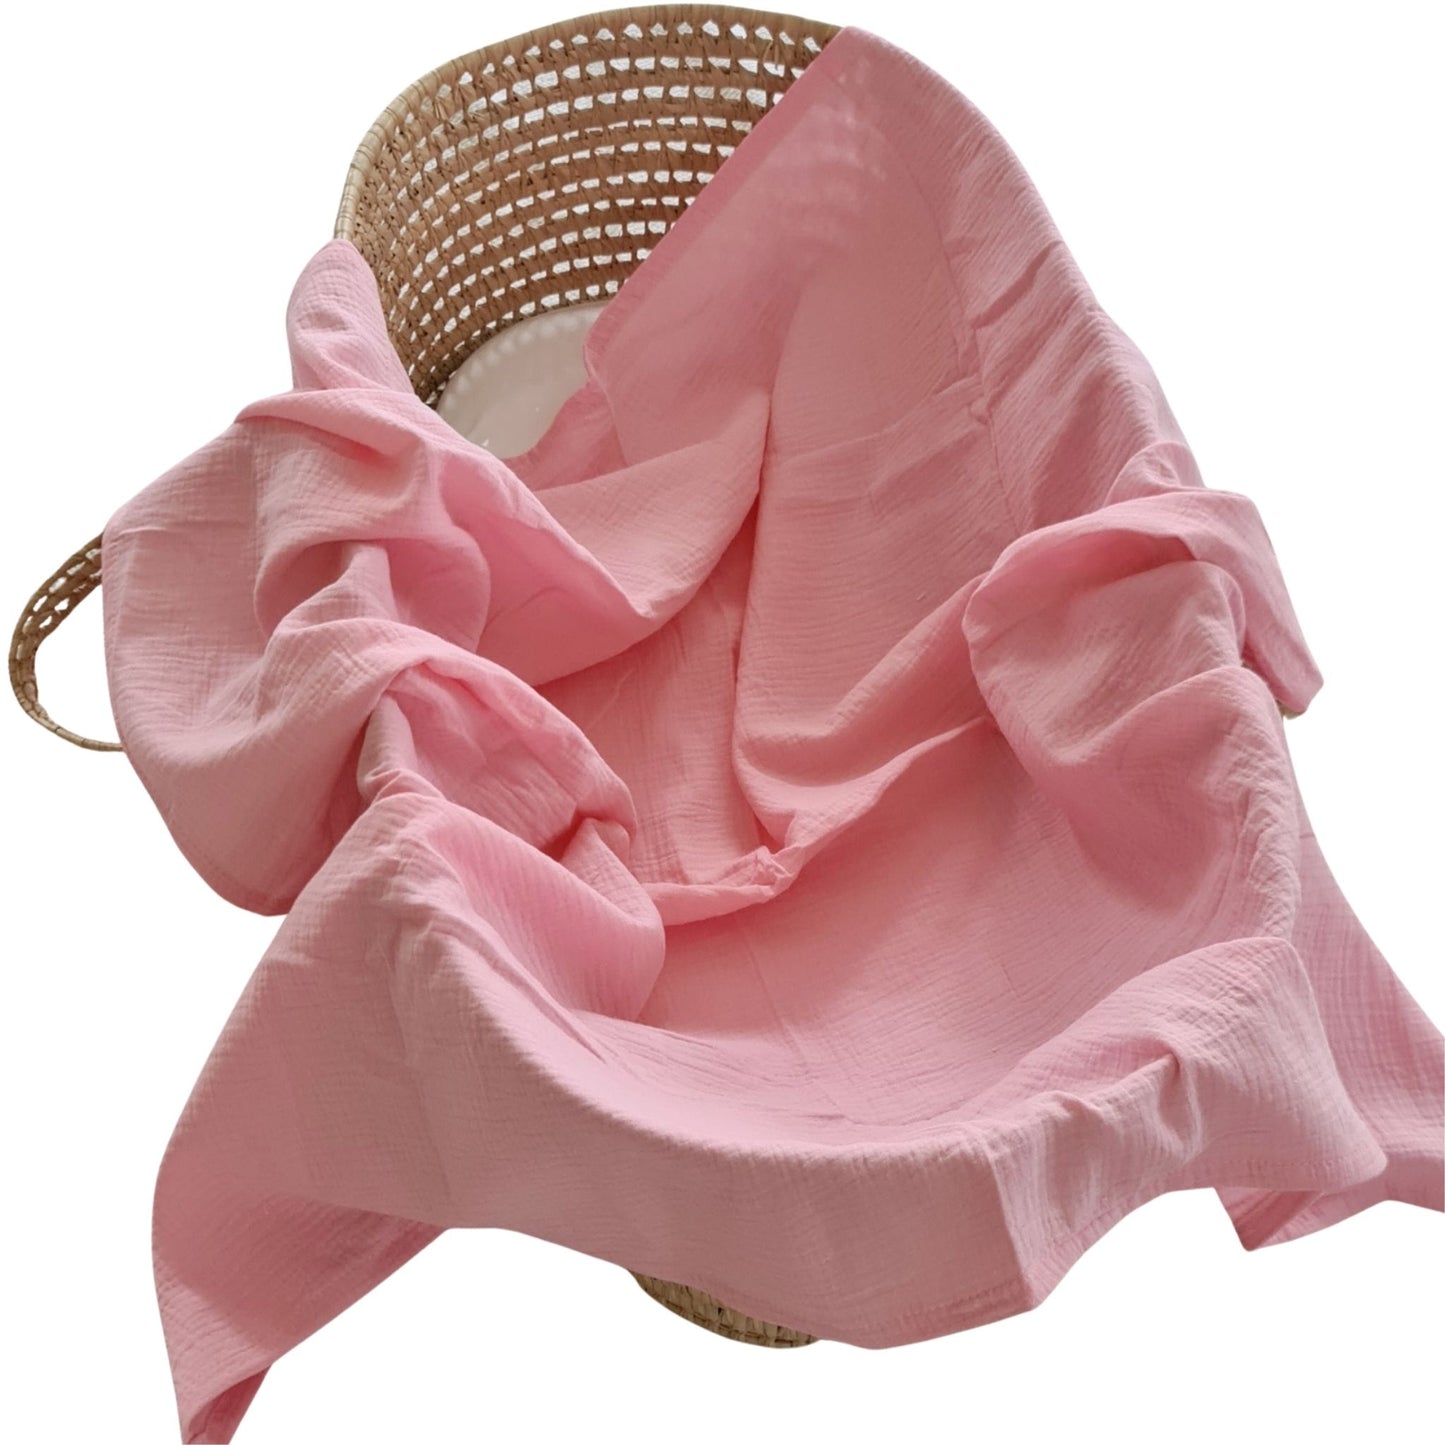 evcushy snuggle blanket large muslin 100% cotton pink